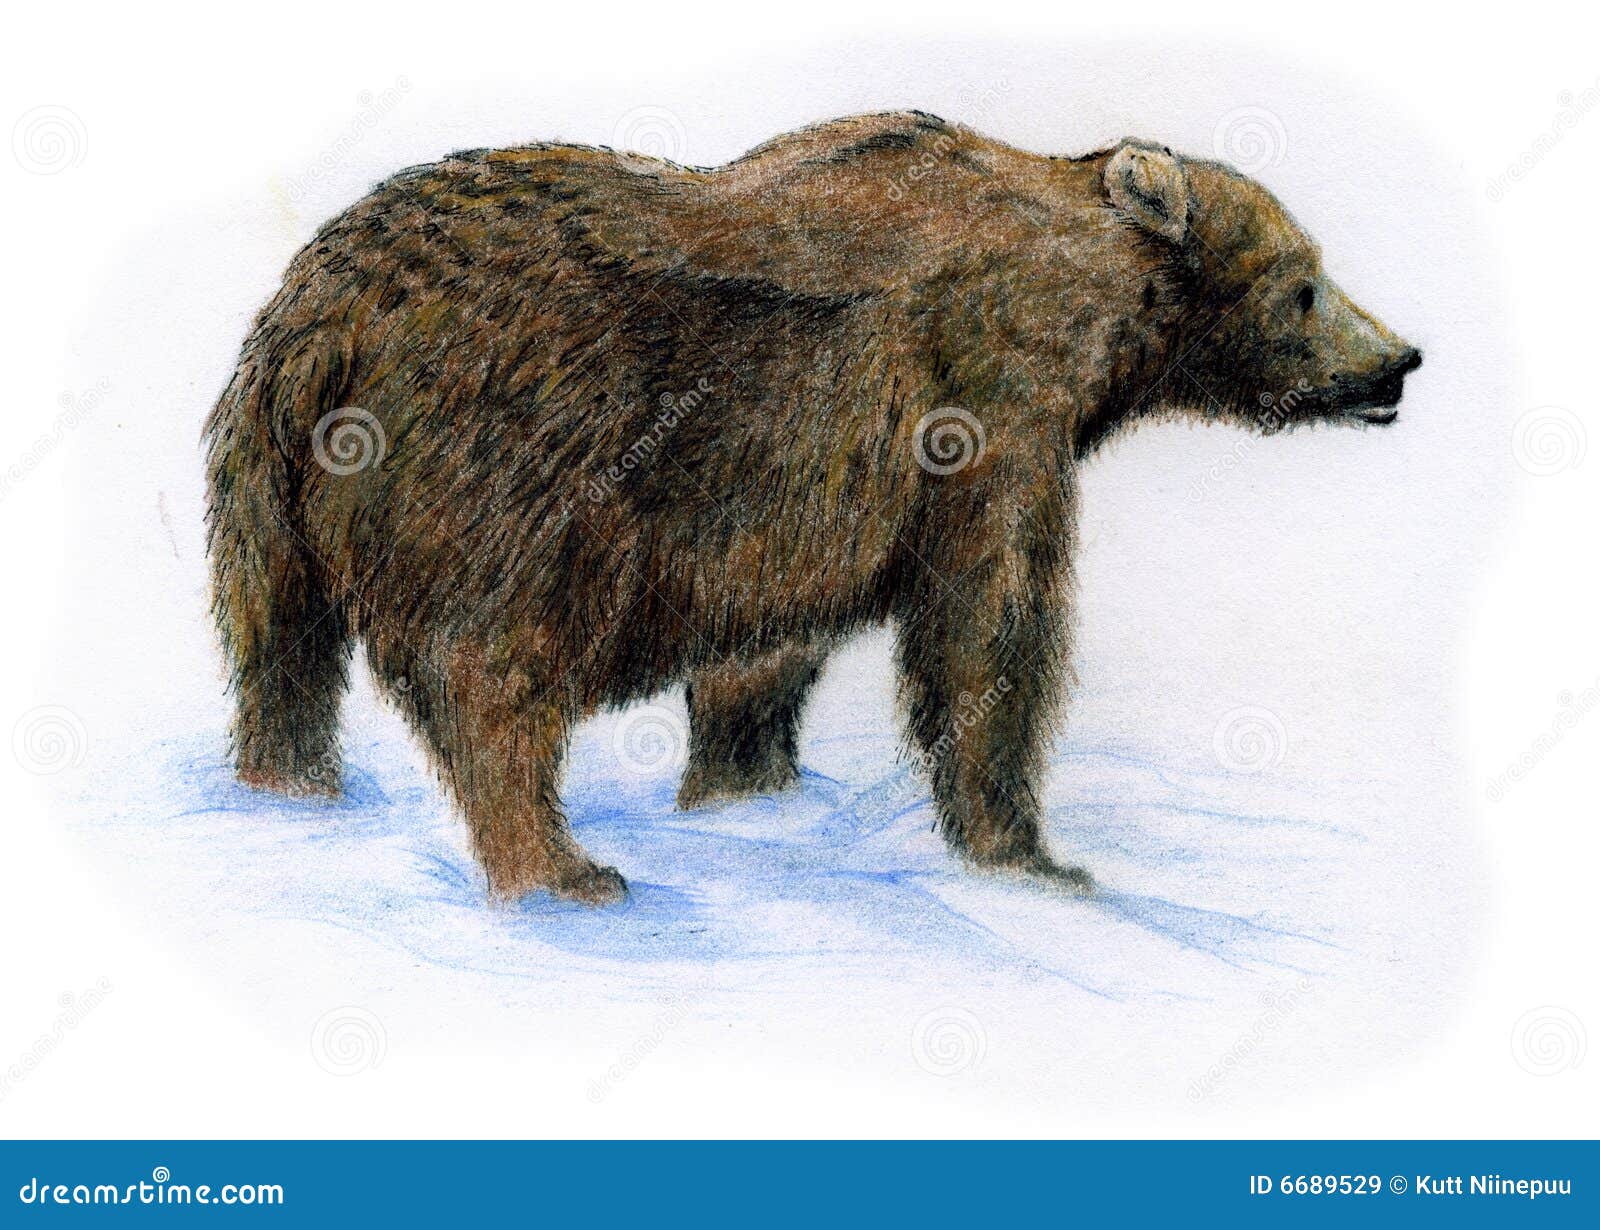 brown bear on snow